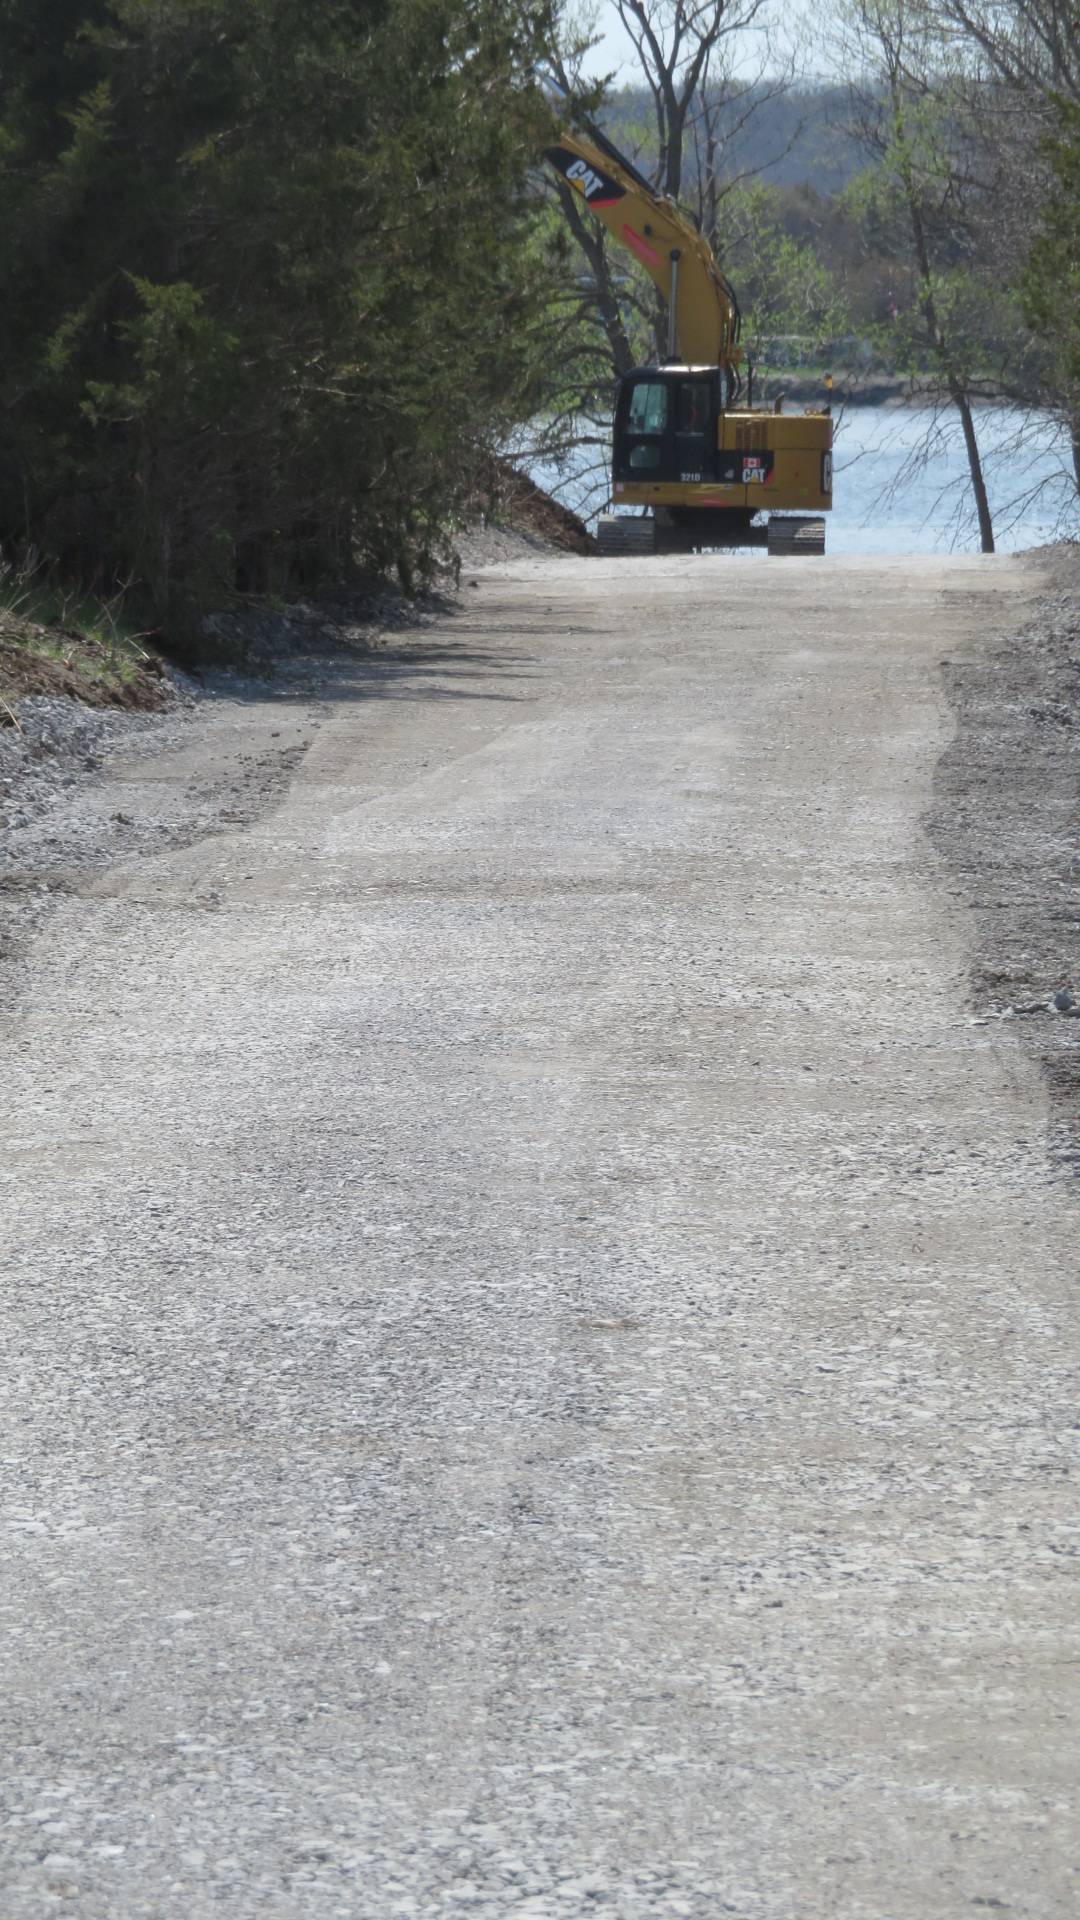 Access road construction, excavator